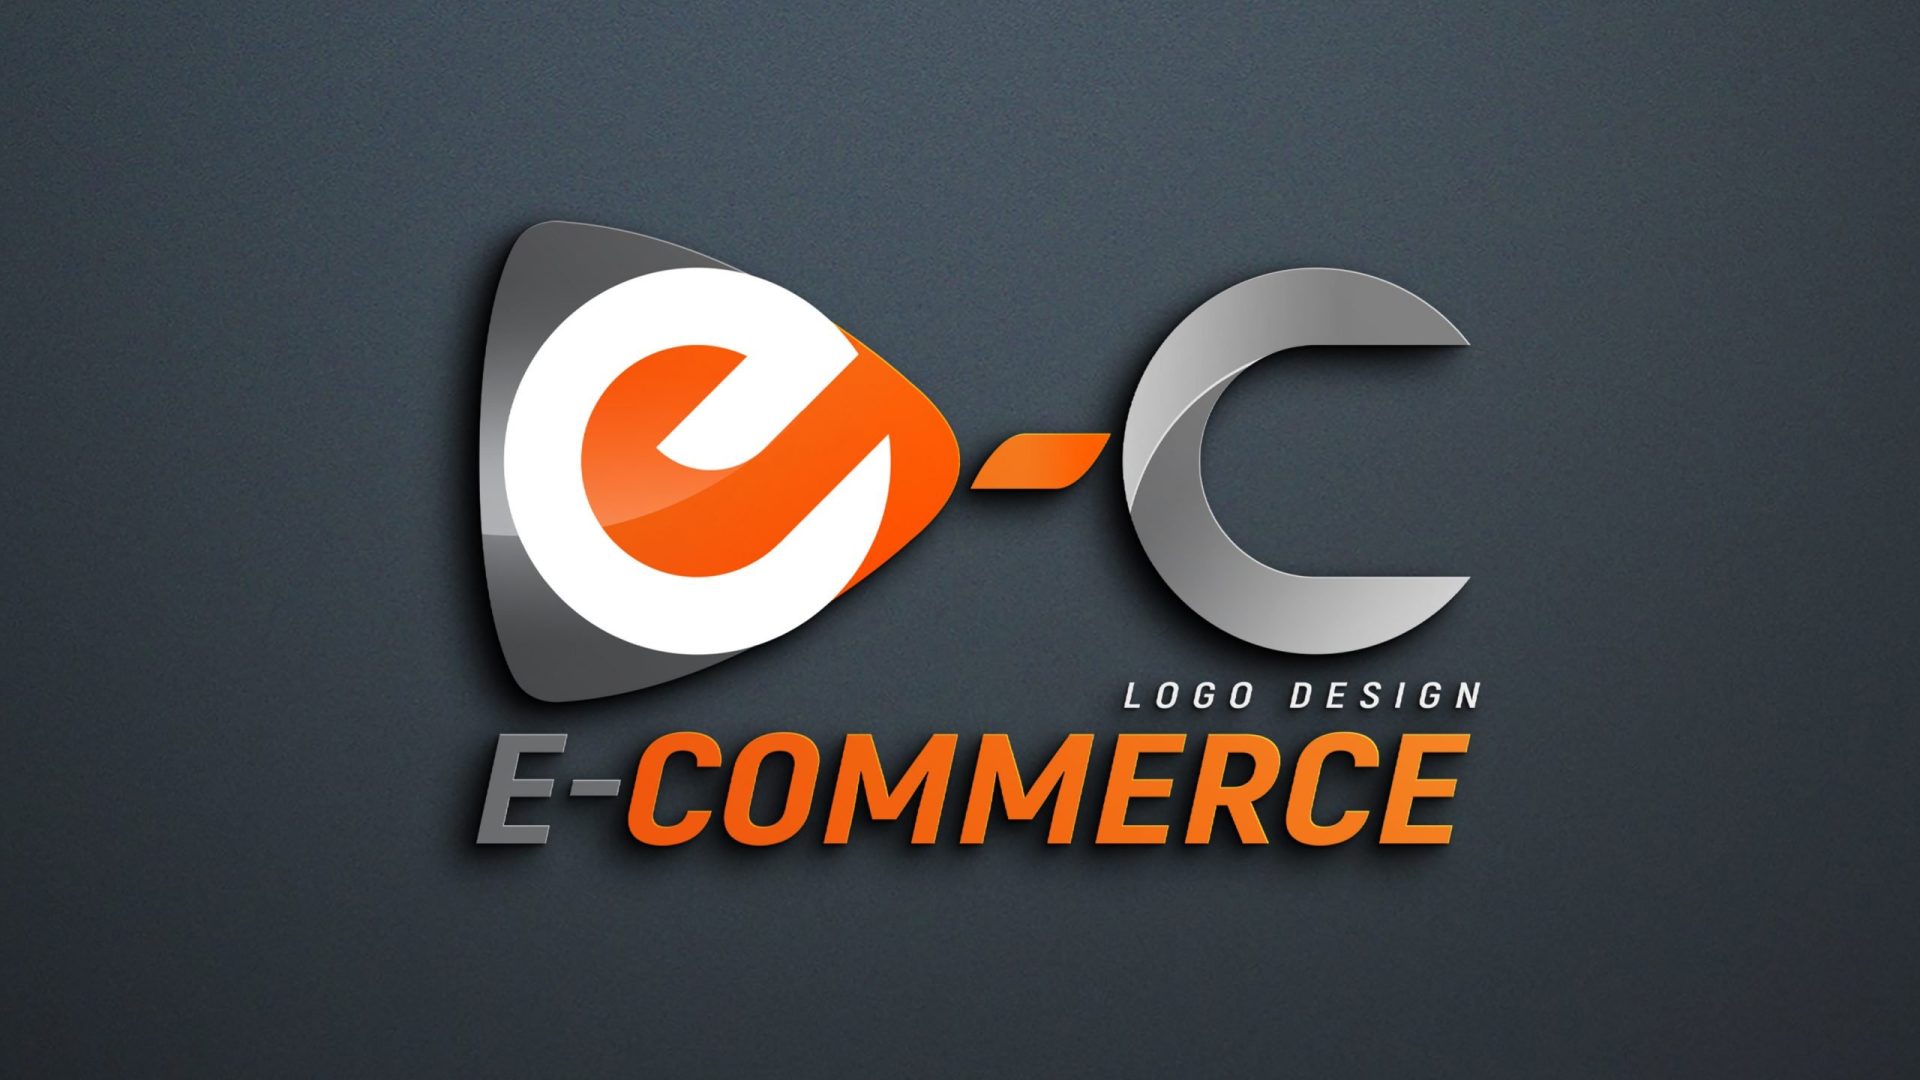 ecommerce logo ideas 2